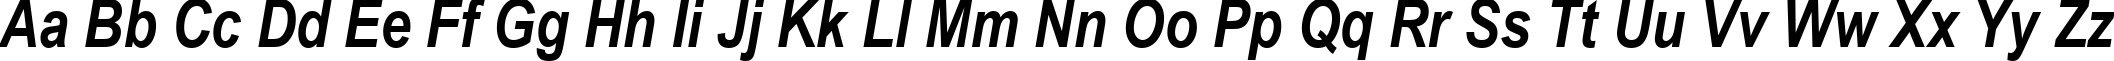 Пример написания английского алфавита шрифтом Arial Narrow Bold Italic